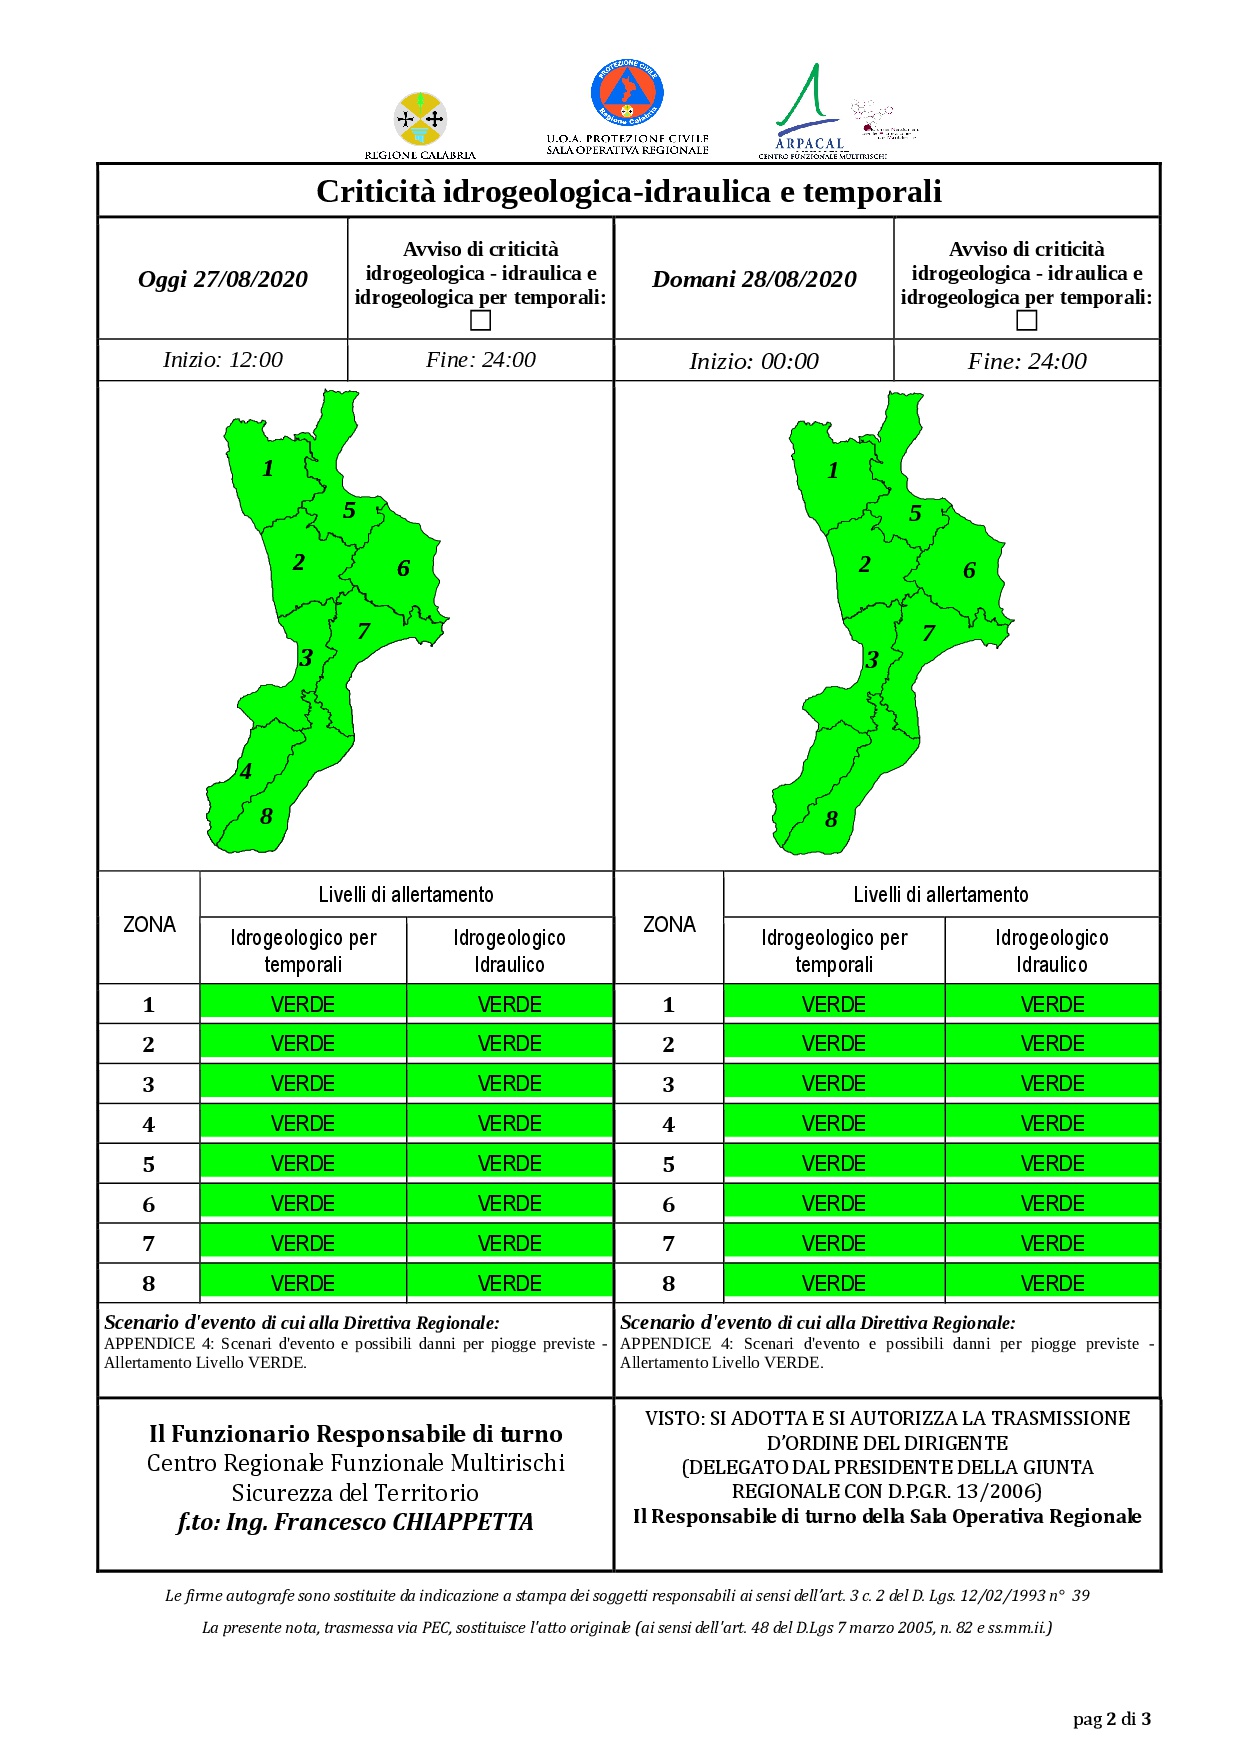 Criticità idrogeologica-idraulica e temporali in Calabria 27-08-2020